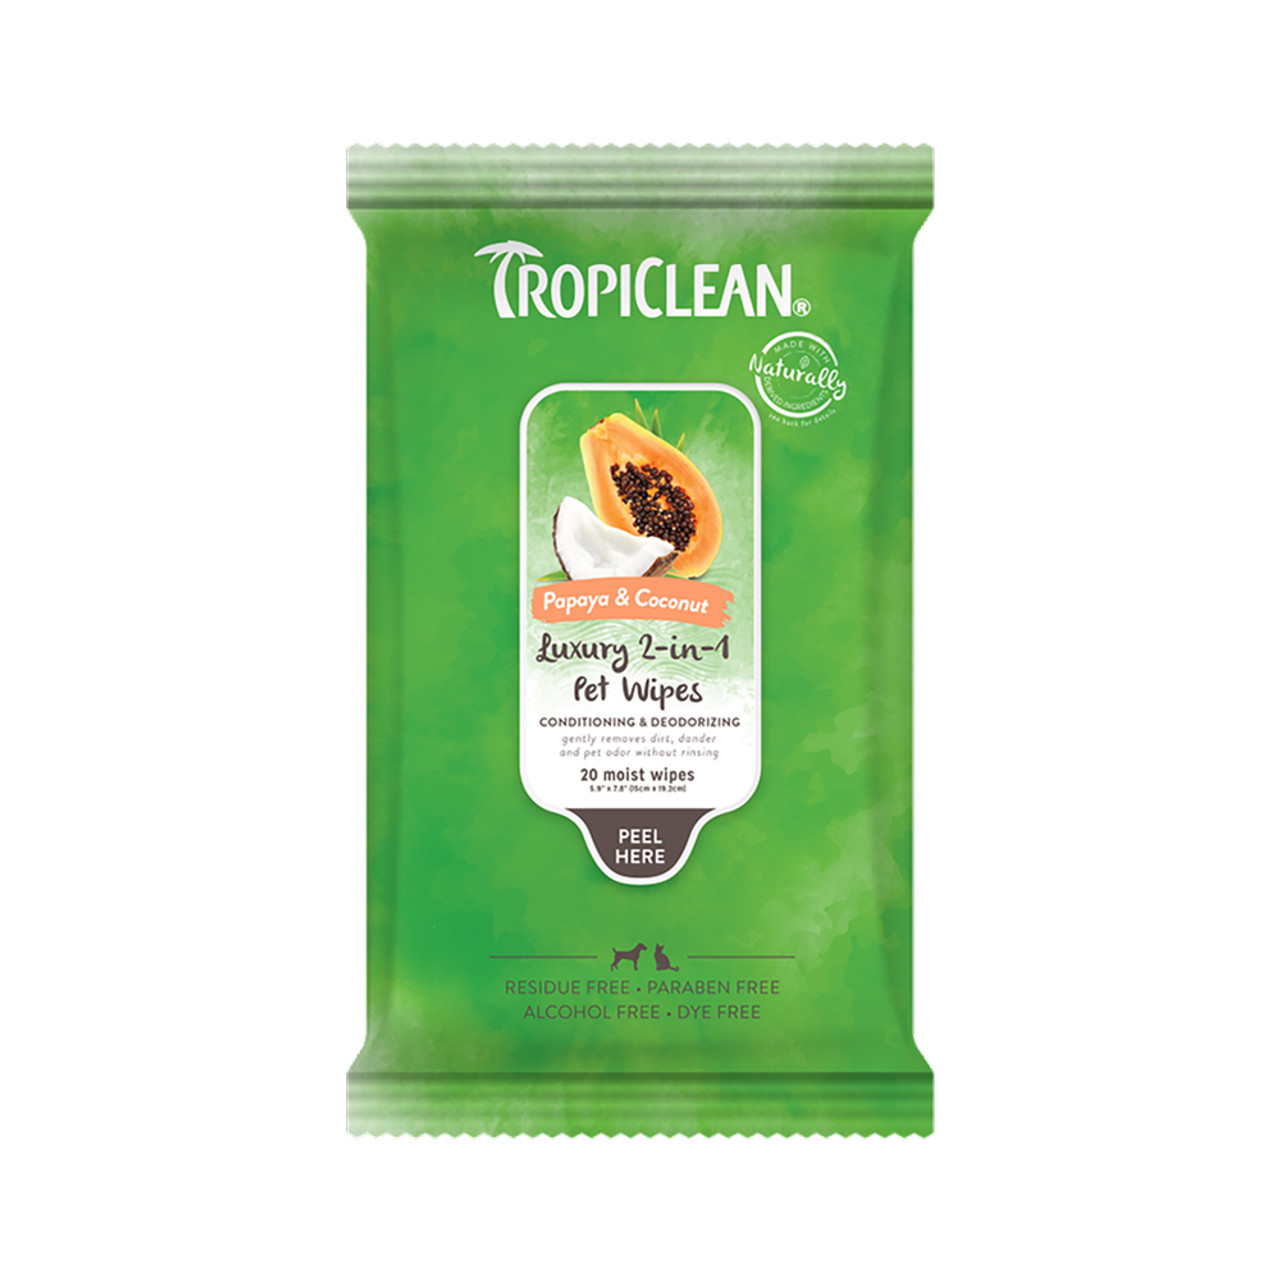 20ct Tropiclean Papaya & Coconut Wipes - Health/First Aid